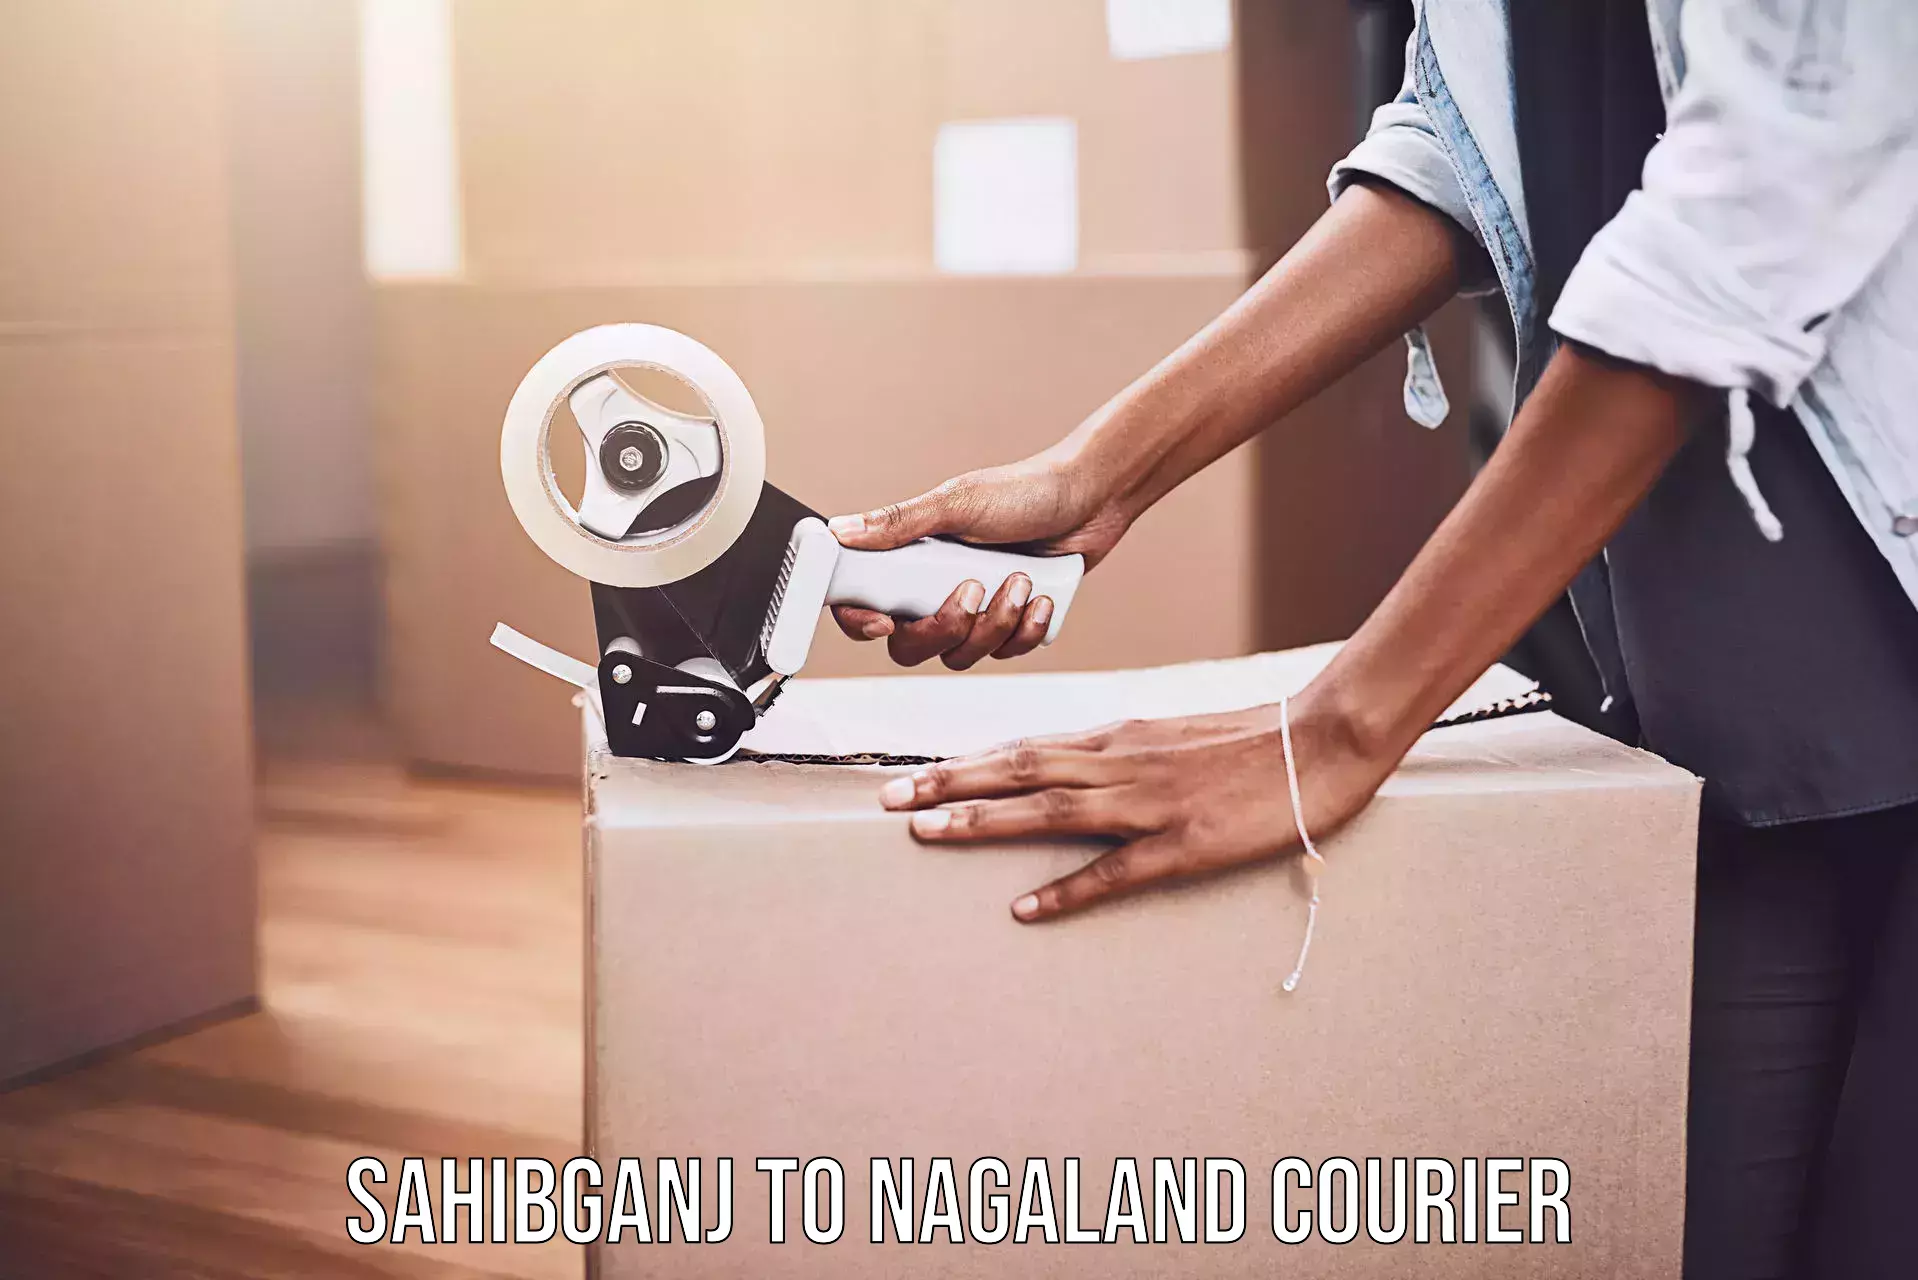 Advanced tracking systems Sahibganj to Nagaland